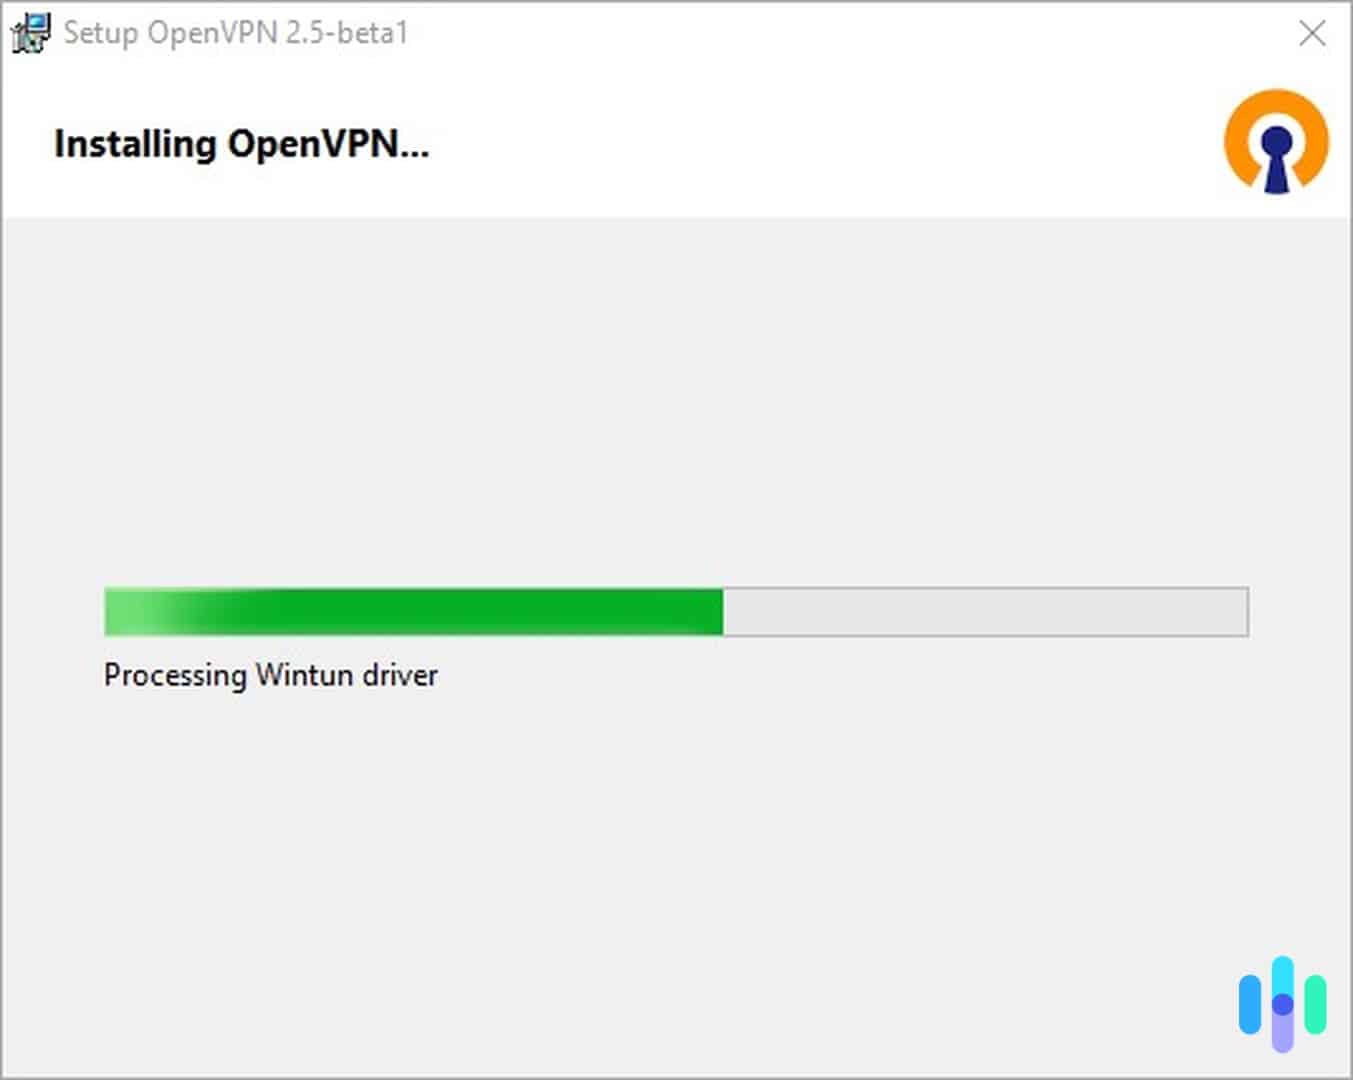 Installing the OpenVPN GUI client on Windows 10